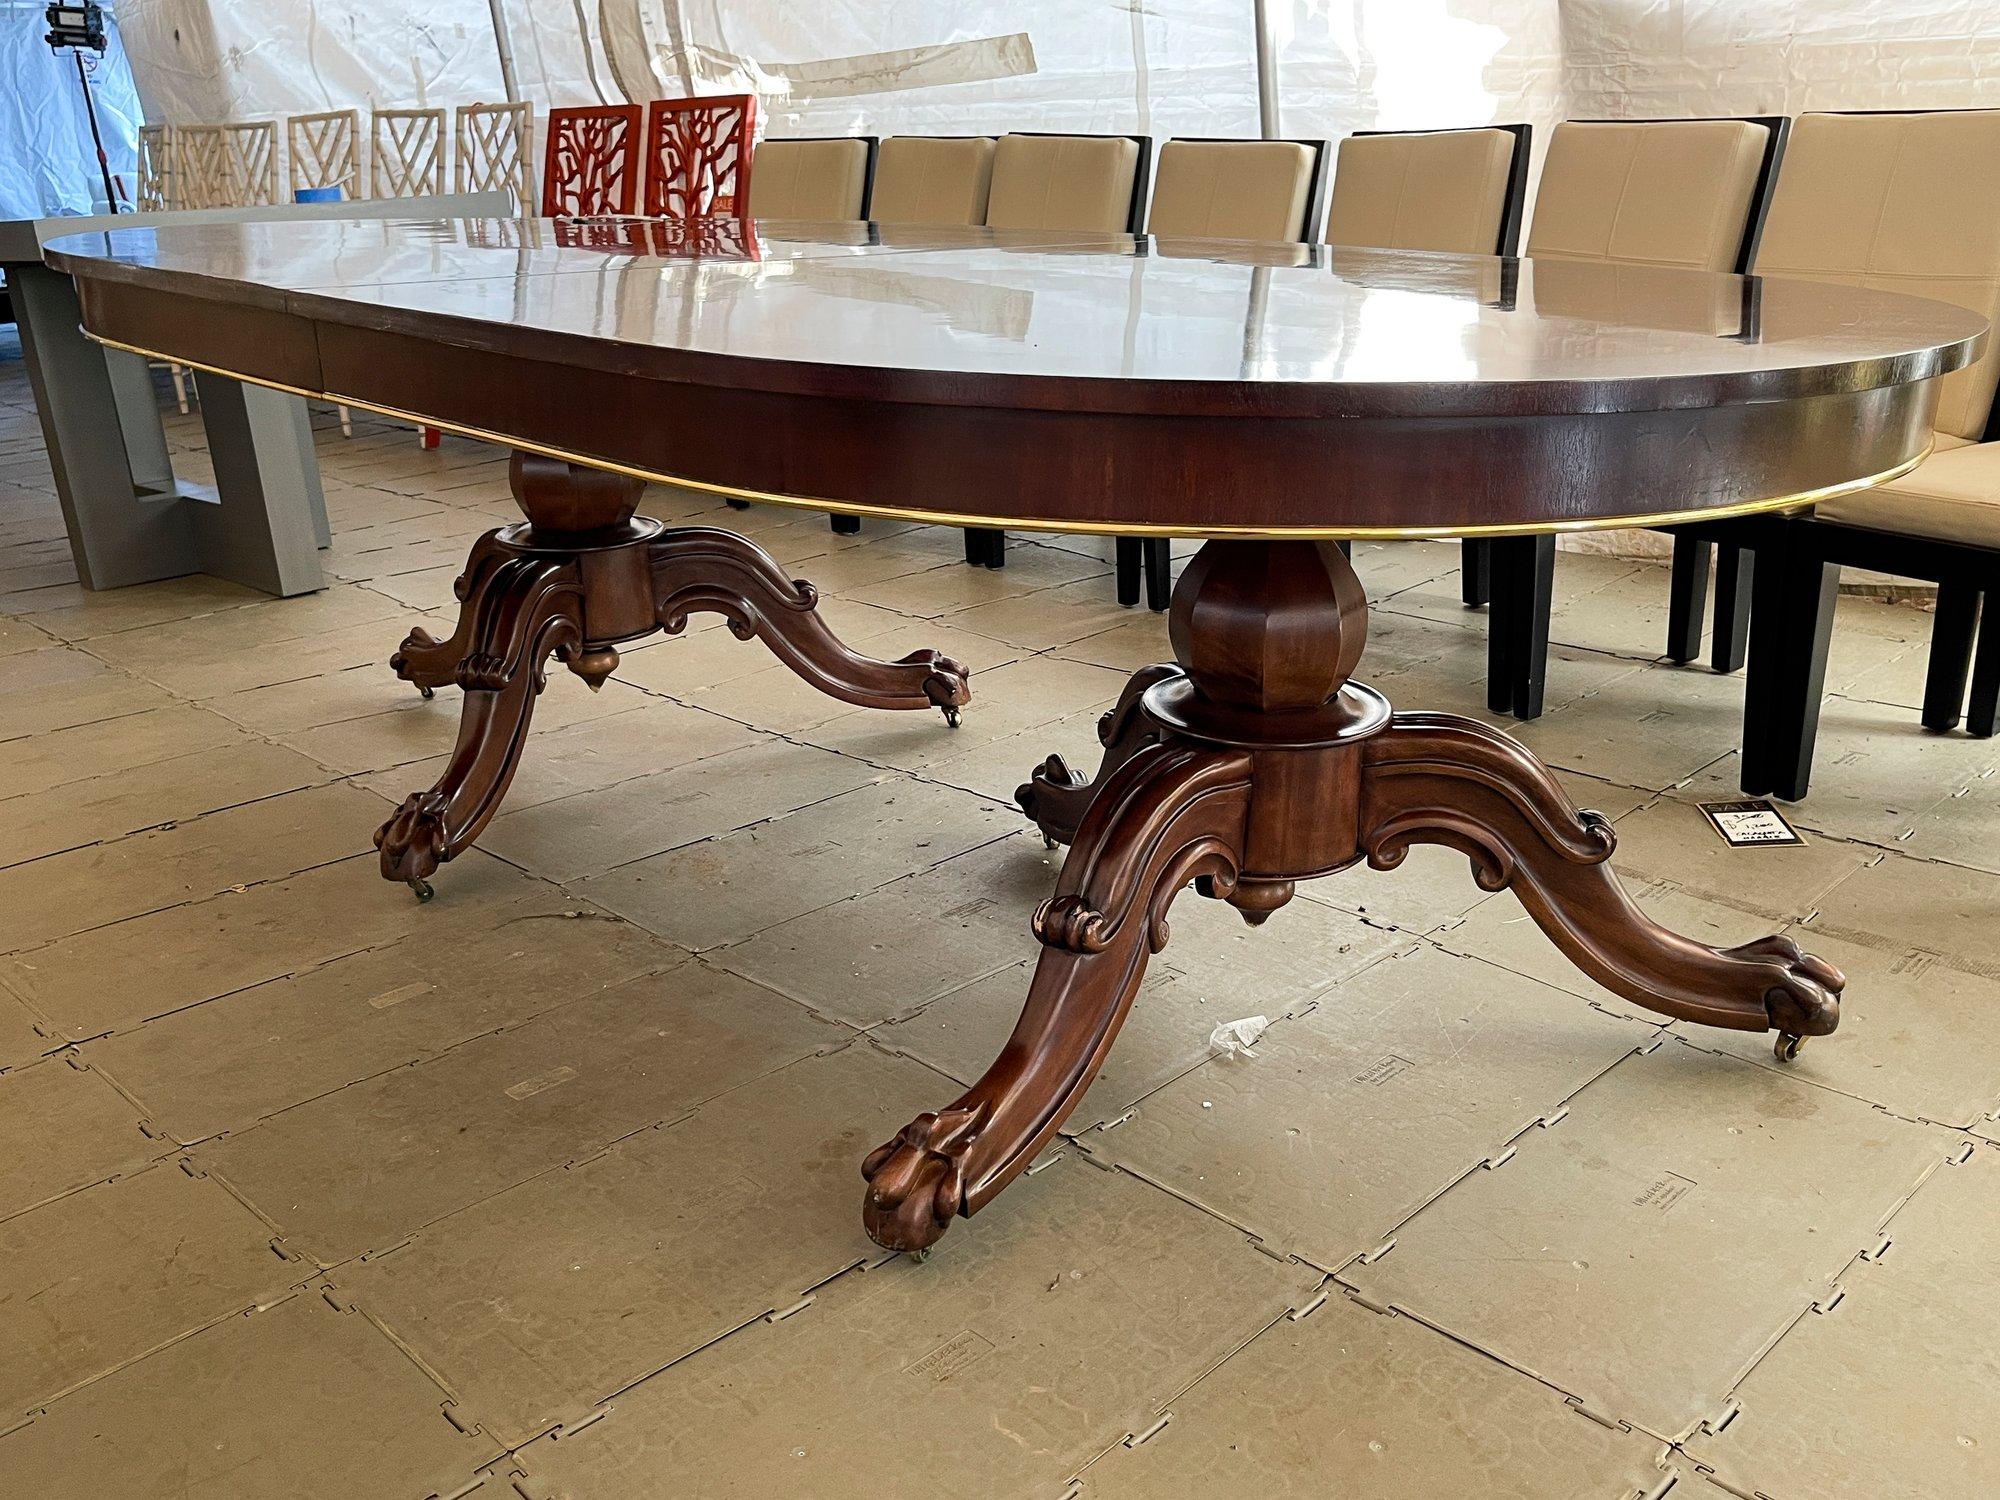 Ralph Lauren Dual Pedestal Extendable Dining Table